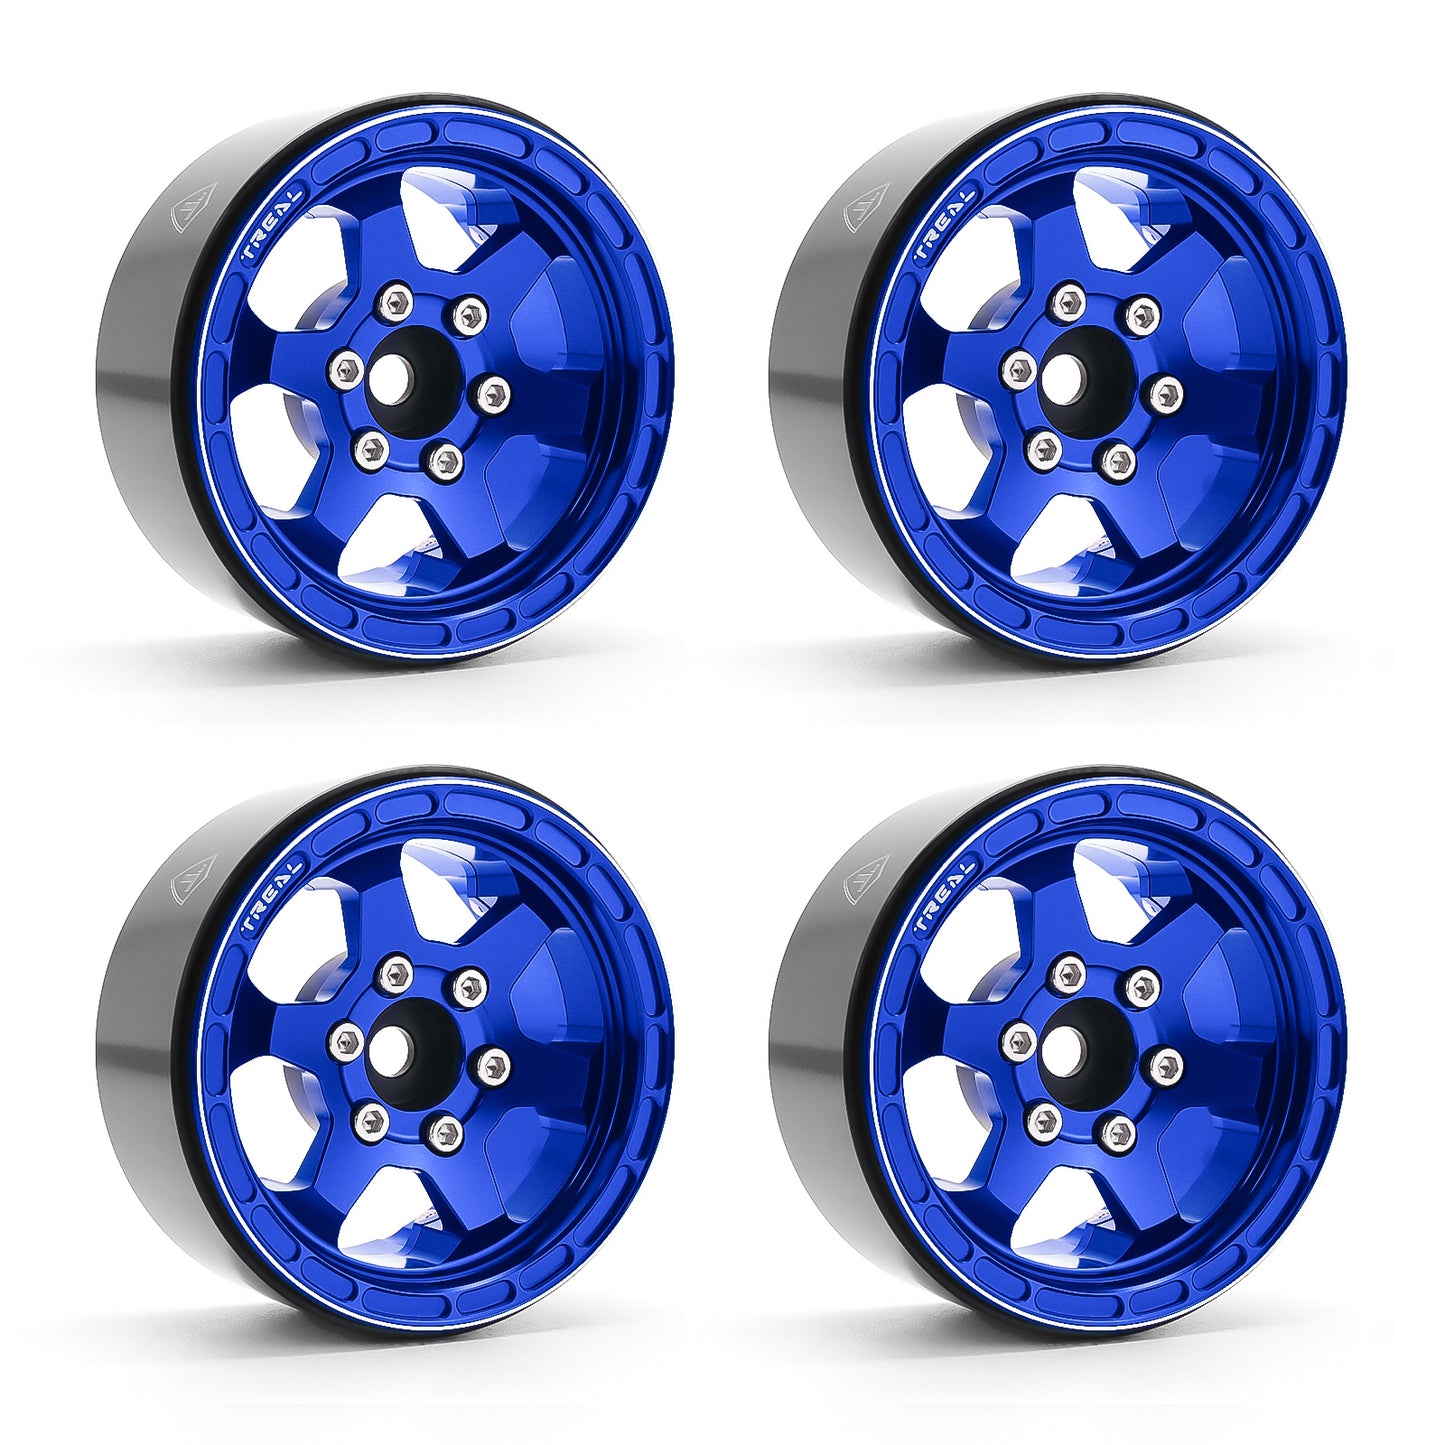 TREAL 1.9" Aluminum Beadlock Wheels (4) Scale-Look Concave Six Spoke Rim Crawler Wheels for 1/10 RC Trucks-Type H